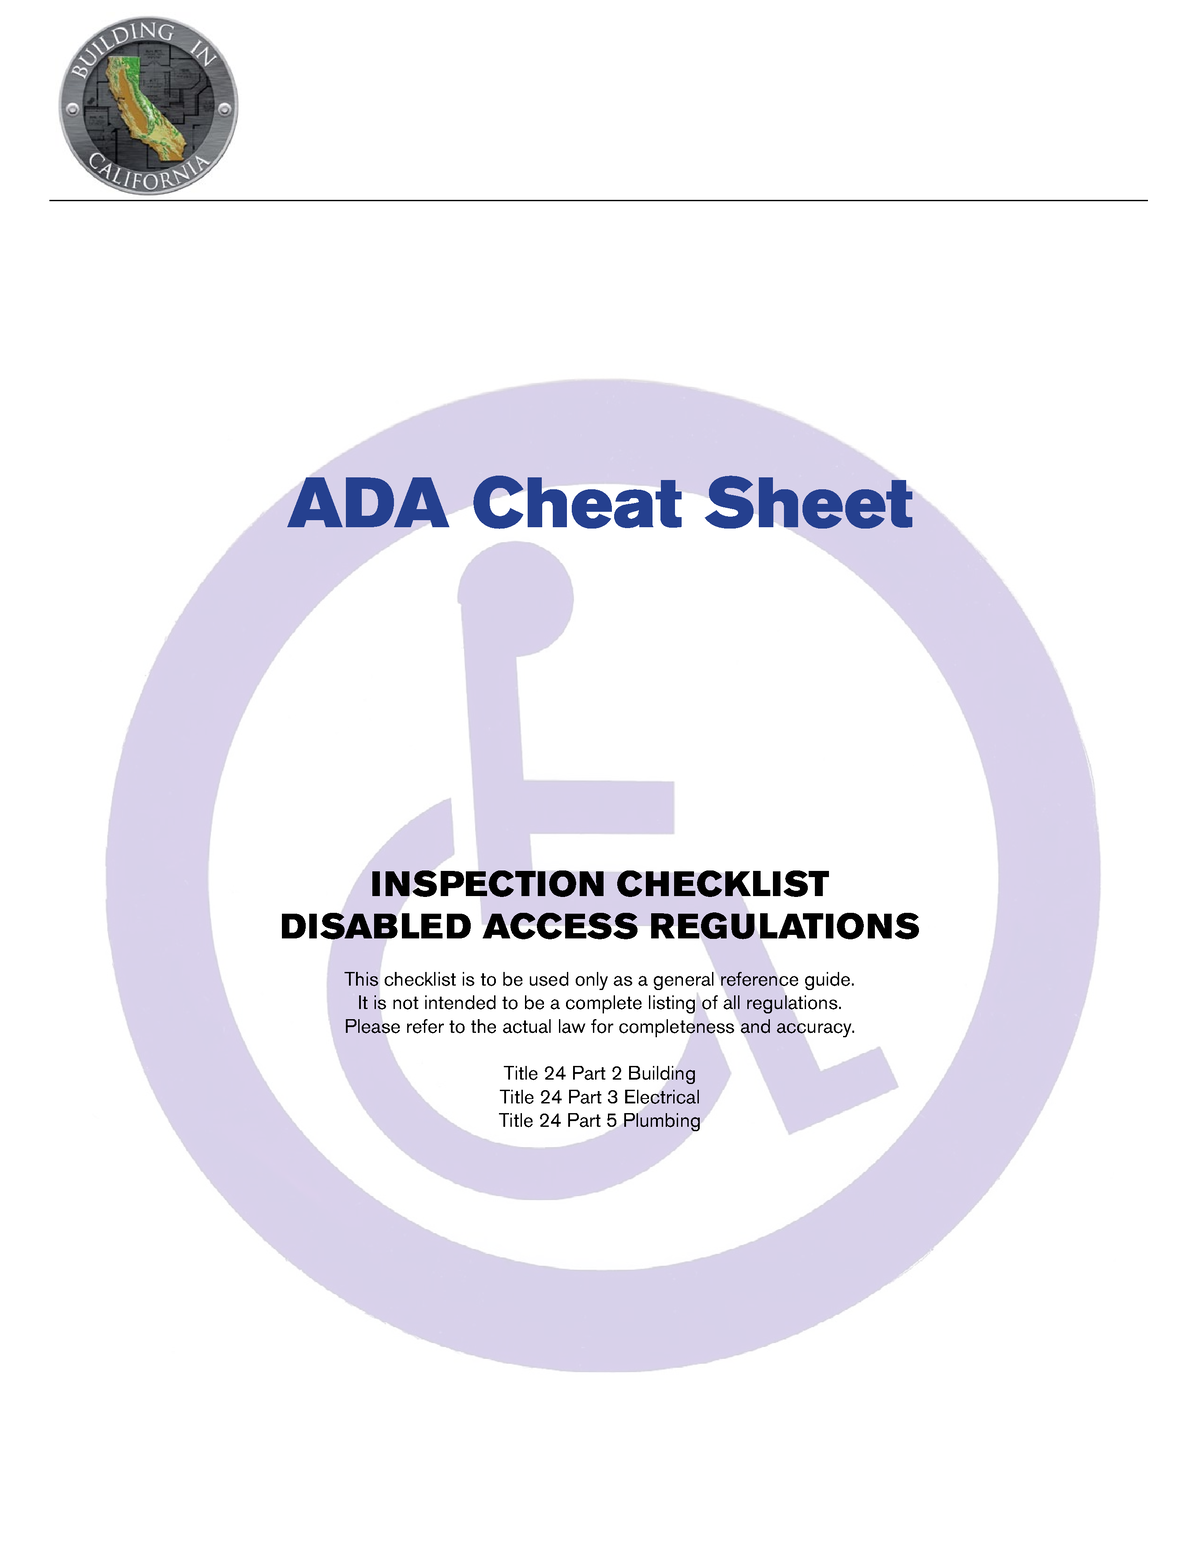 ADA Handicap Parking Requirements & Cheat Sheet